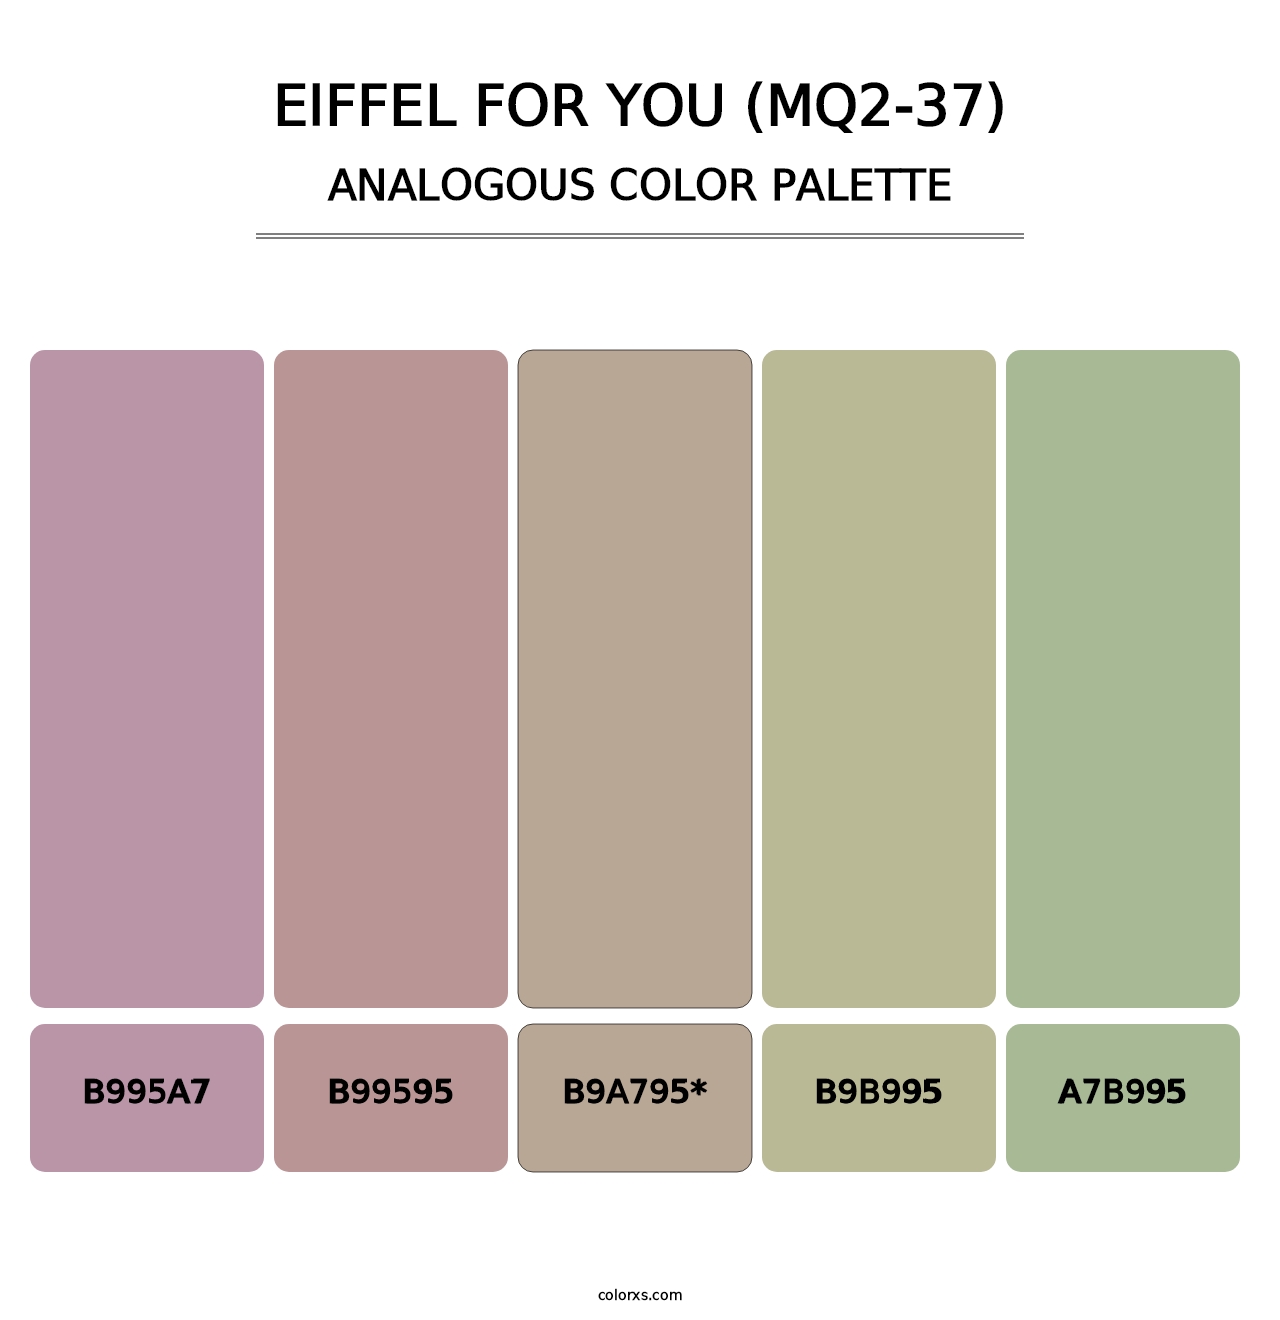 Eiffel For You (MQ2-37) - Analogous Color Palette